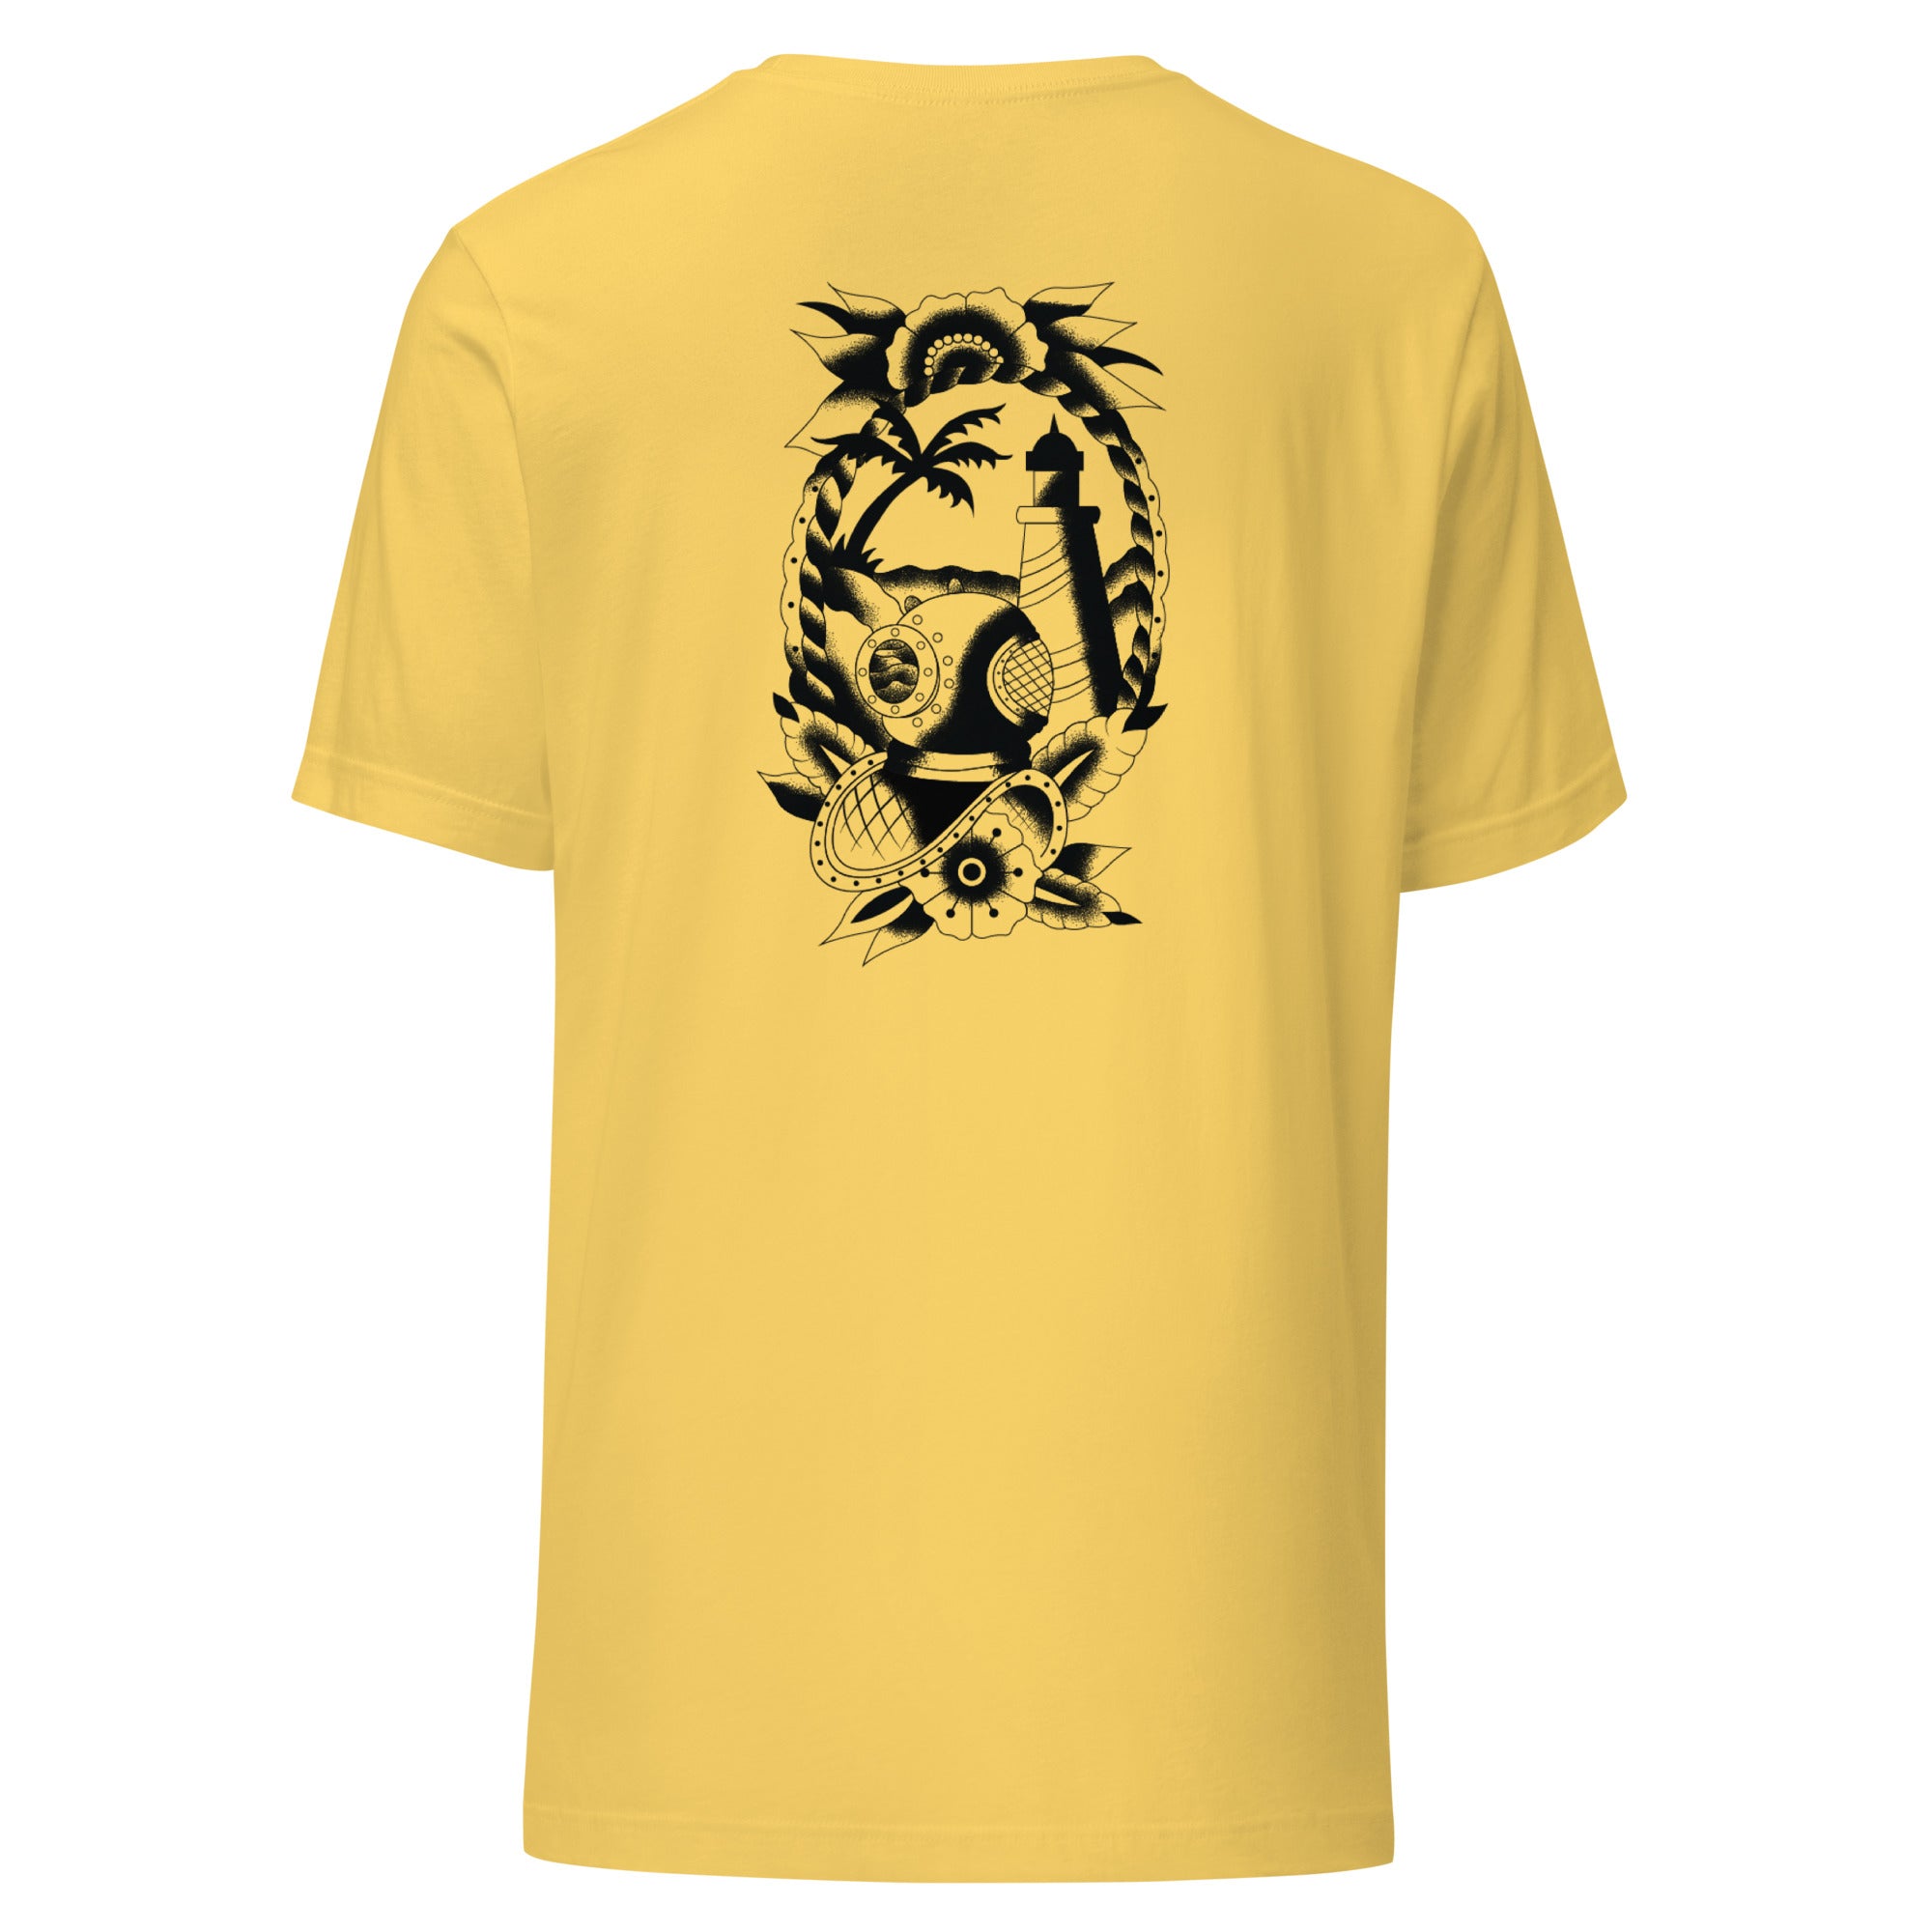 Surf Station x Darby Moore Sailor Tat Black Men's S/S T-Shirt